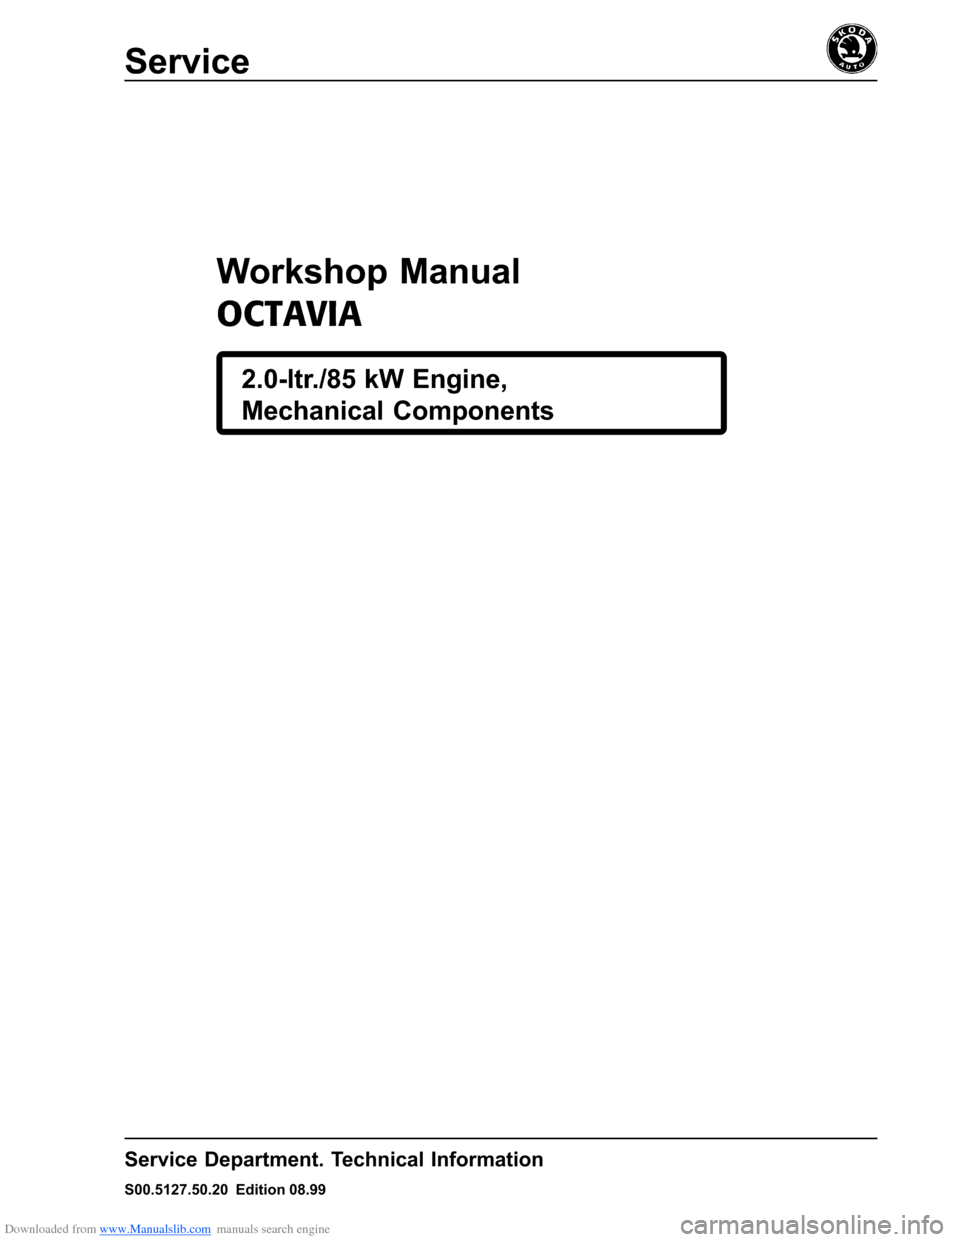 SKODA OCTAVIA 2000 1.G / (1U) 2.0 85kw Engine Workshop Manual Downloaded from www.Manualslib.com manuals search engine �������
��������� ������ �������
�������� ������������ ���������� �����������
�����������������������������
���������������������� 
�����������